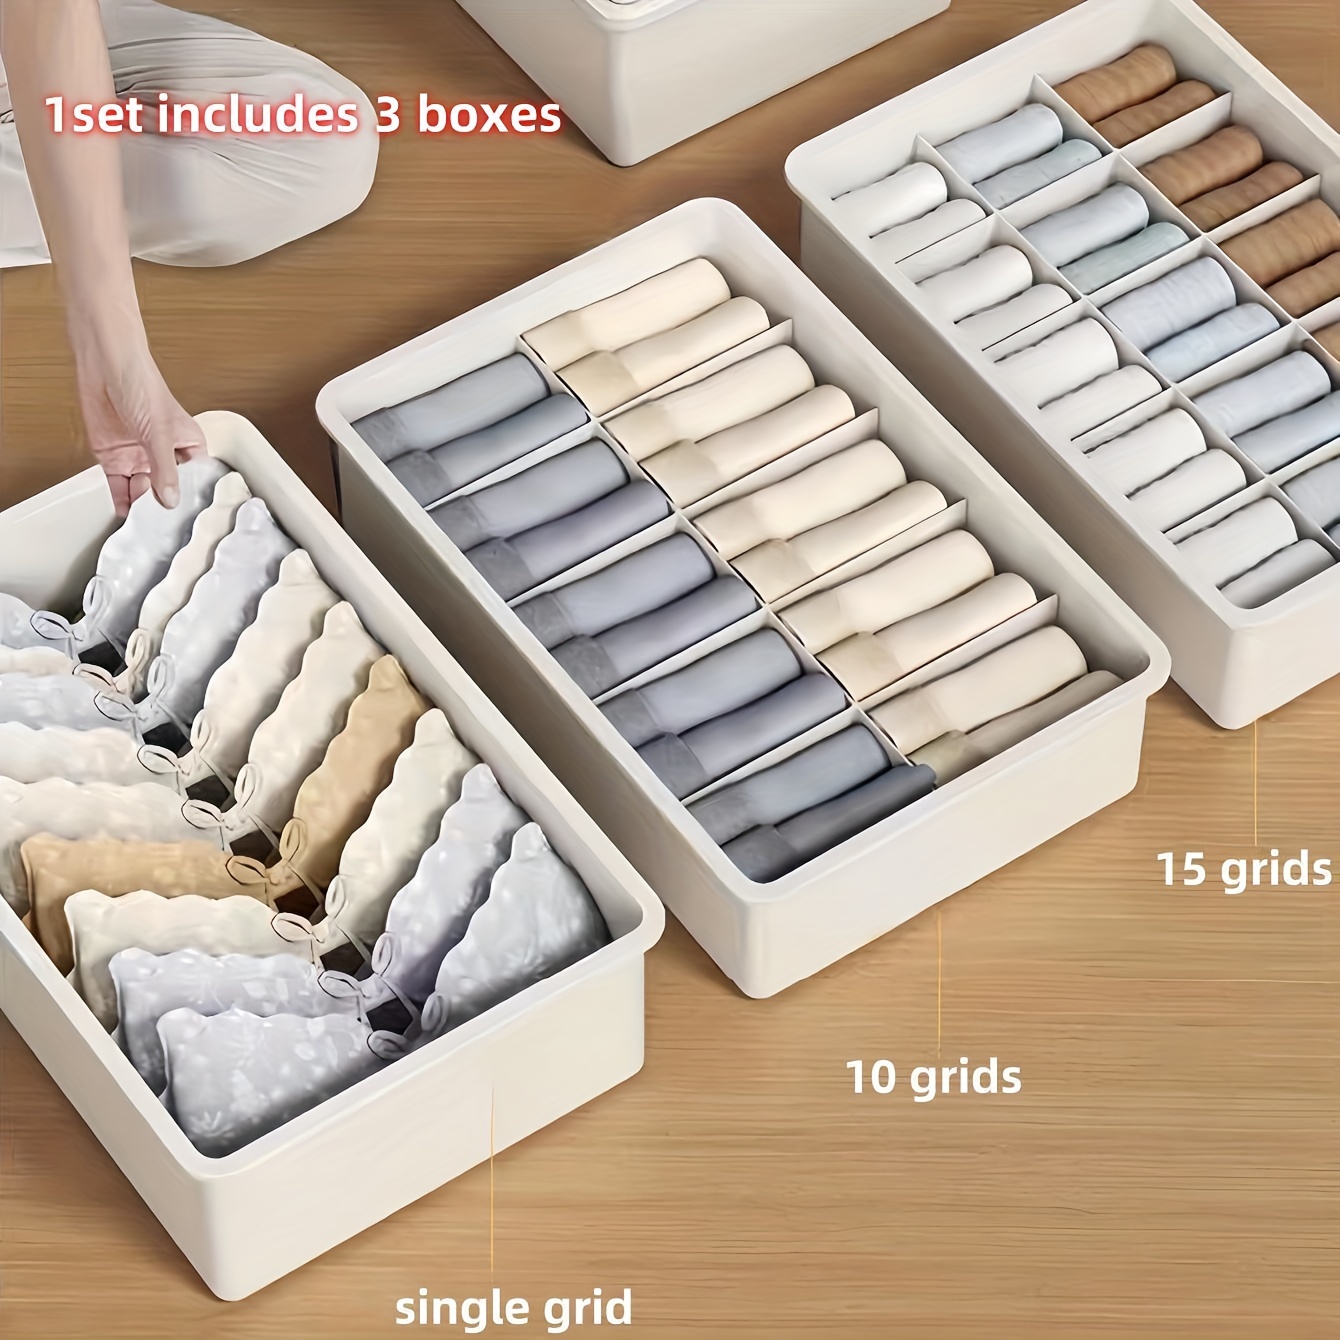 Sweet Home Japanese Underwear Storage With Lid-10 Grids